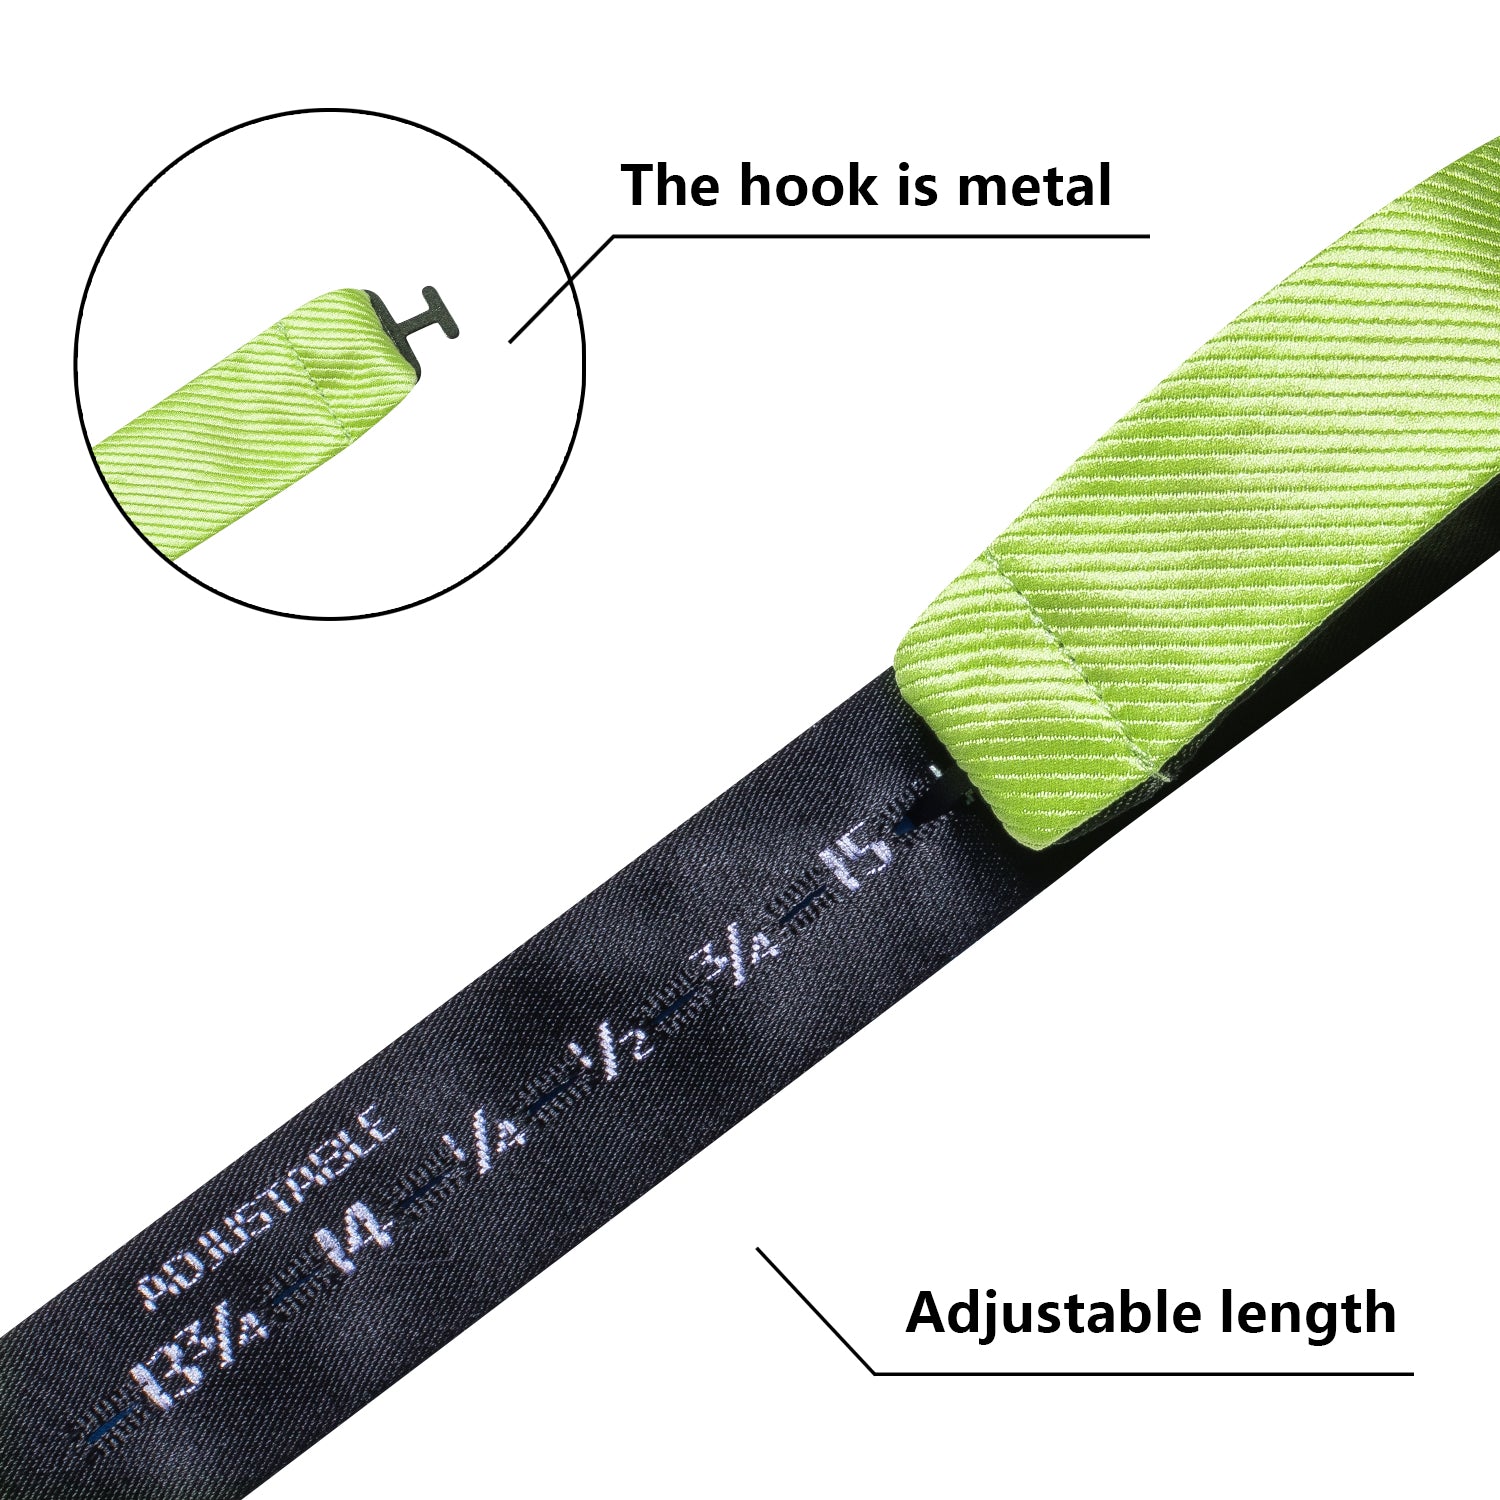 Spring Green Striped Silk Self-tied Bow Tie Pocket Square Cufflinks Set